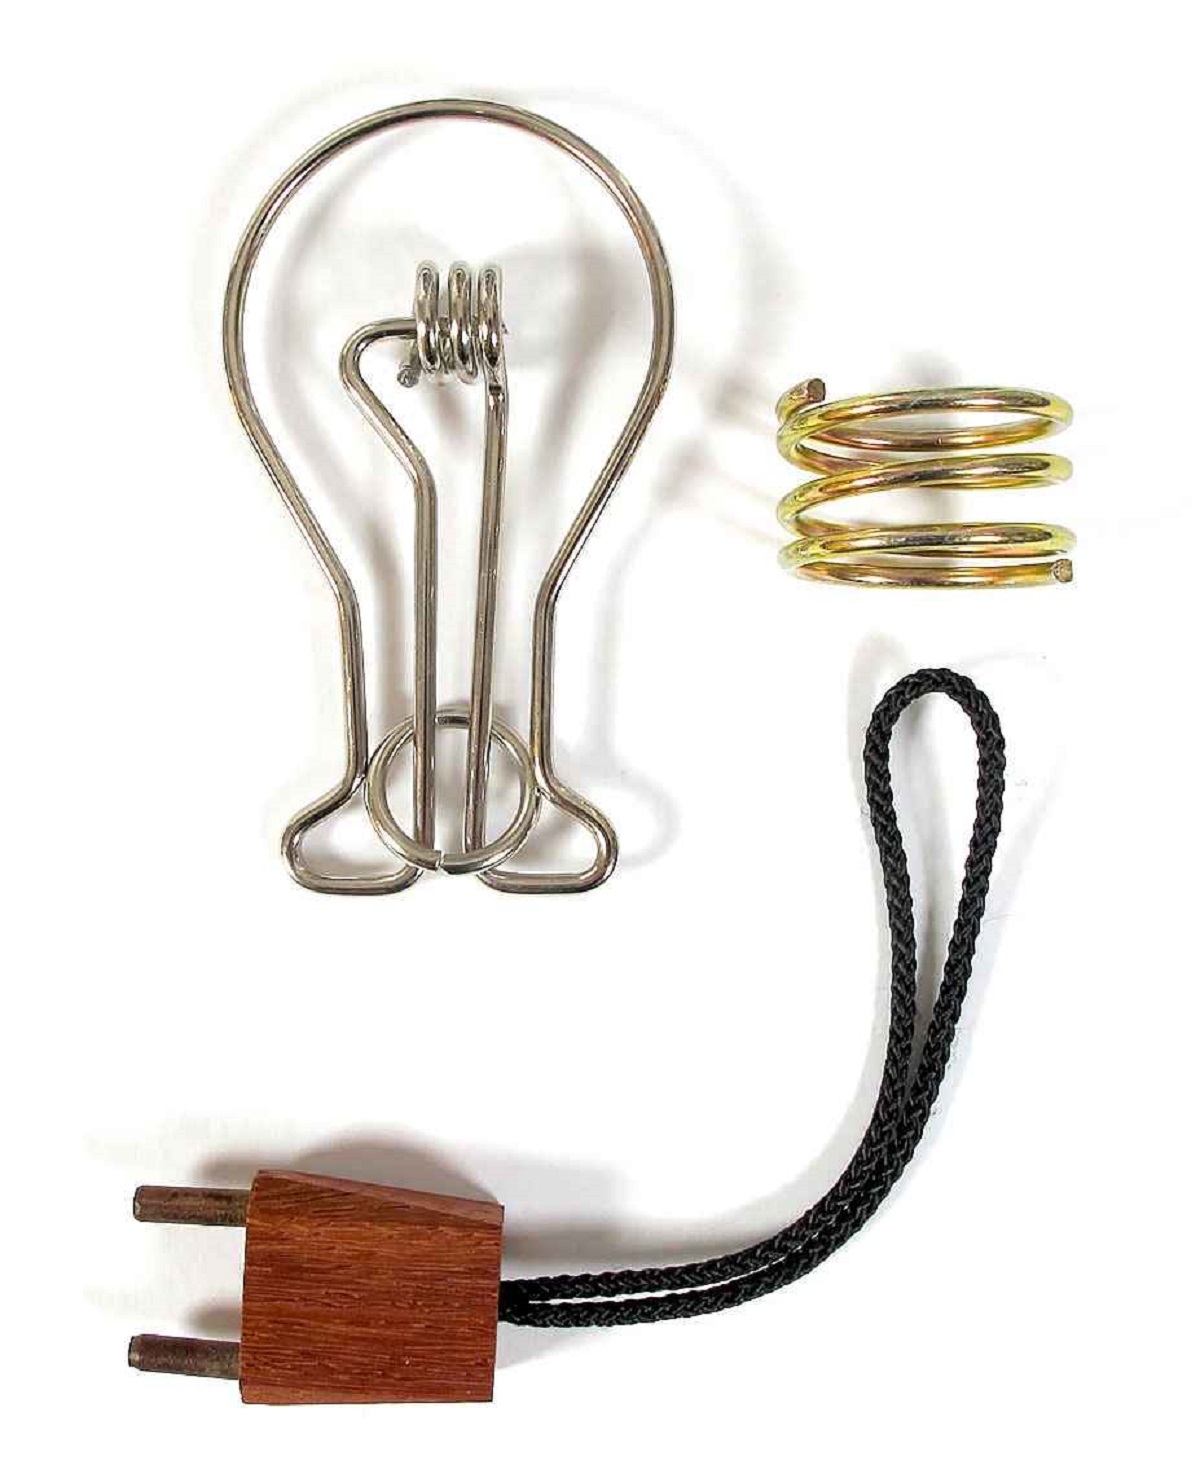 Puzzle mecanic Constantin's: Metal Light Bulb. Becul metalic